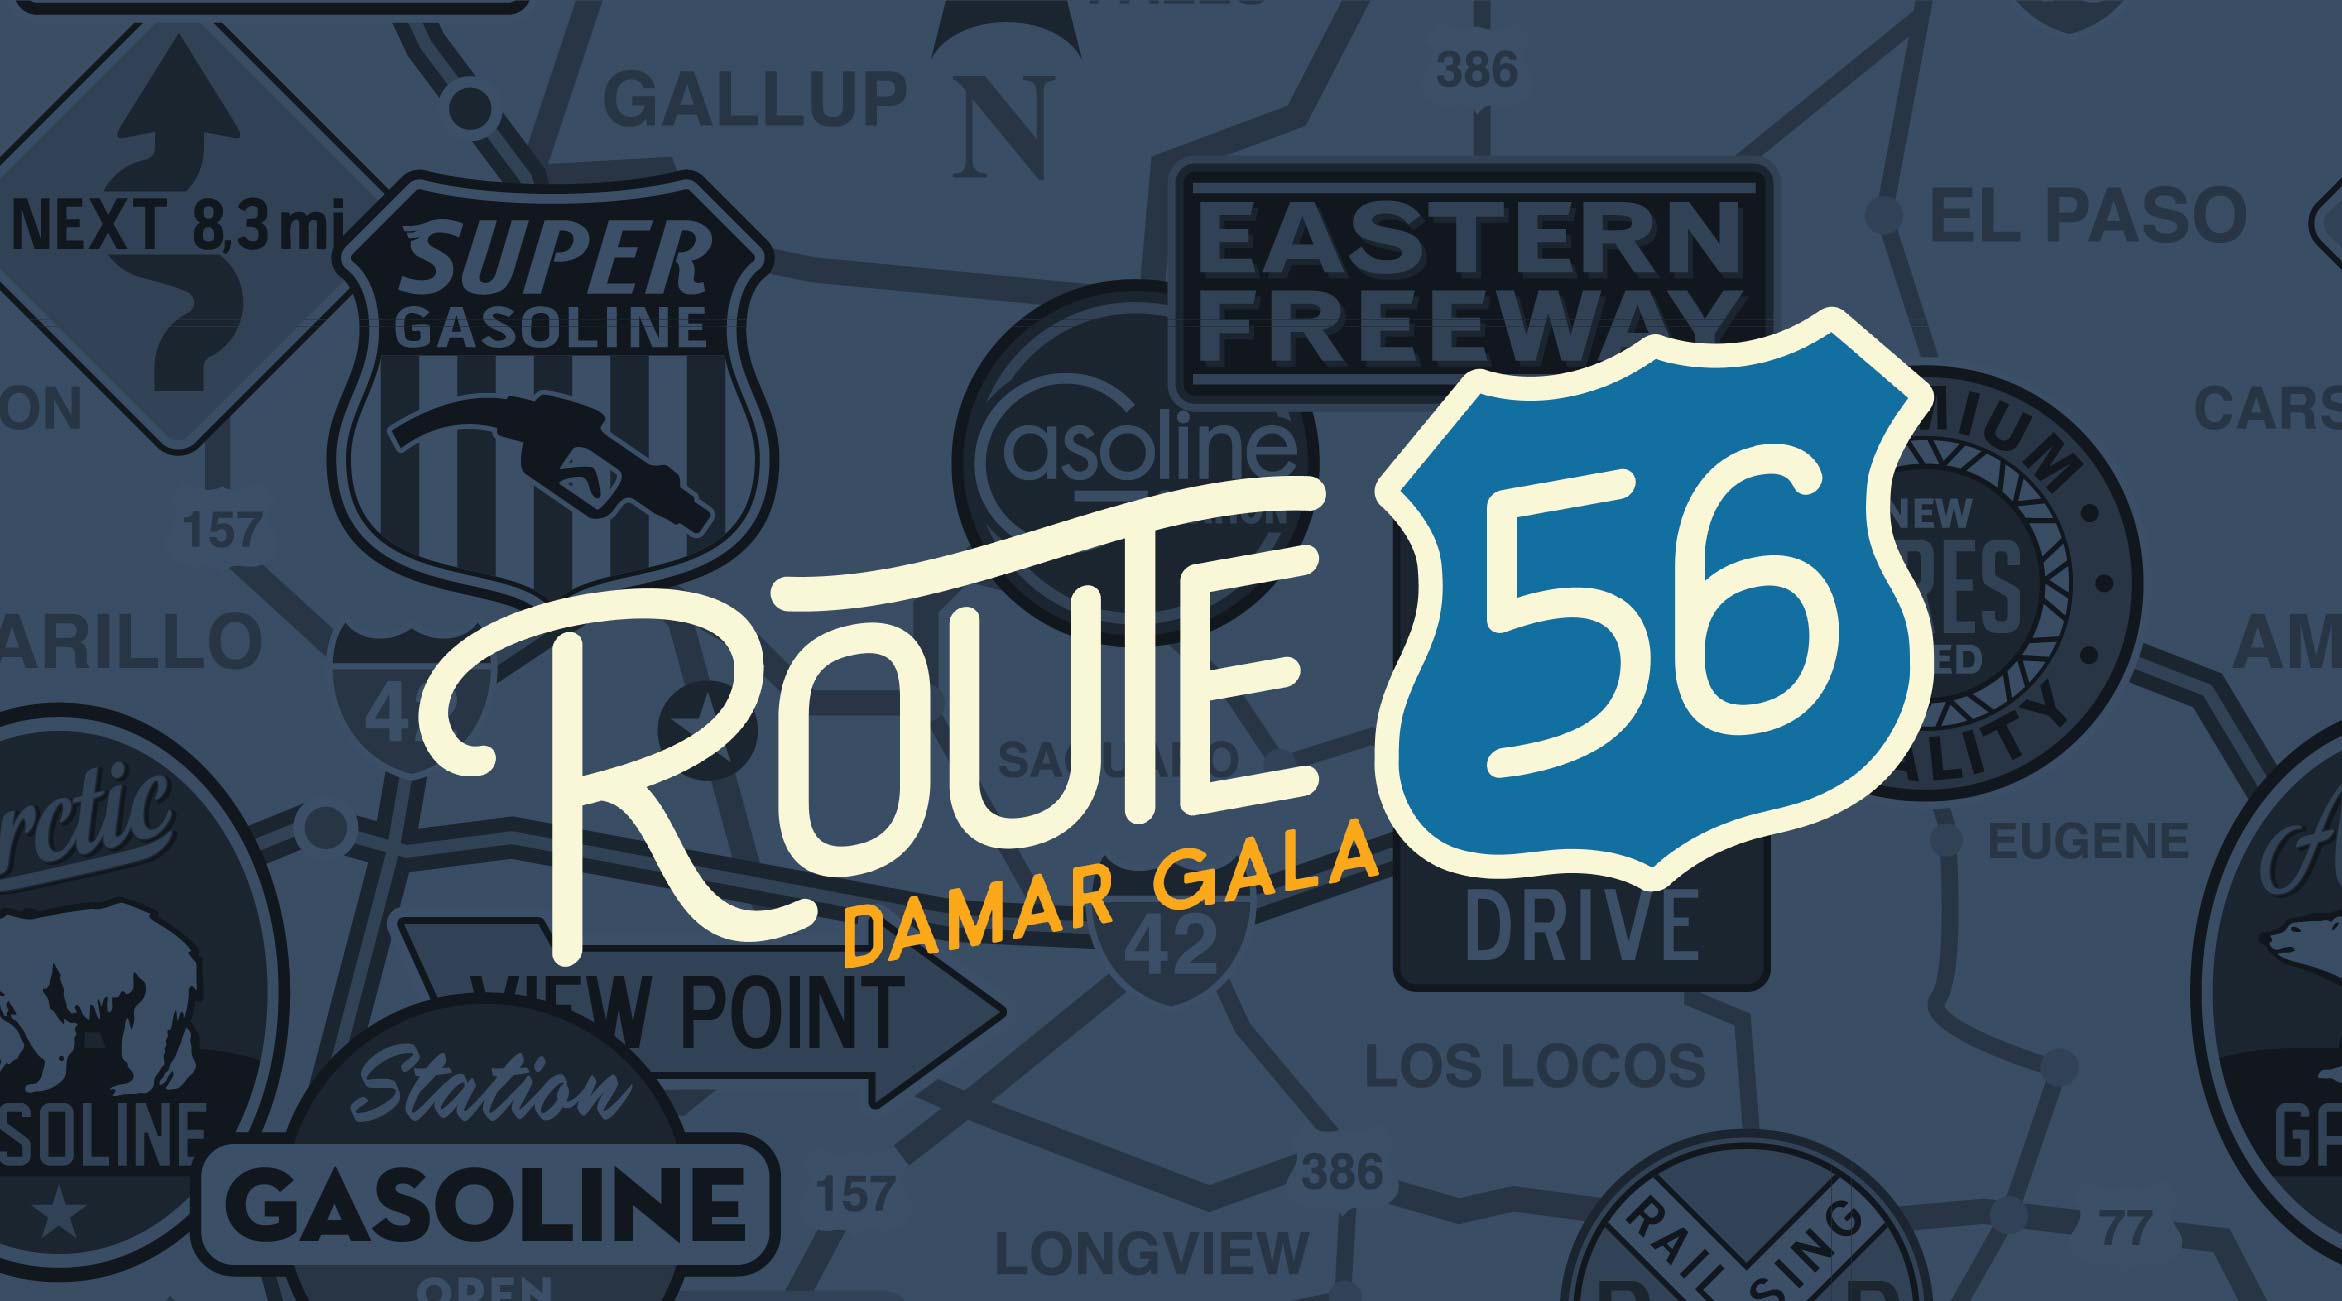 Route 56 Damar Gala